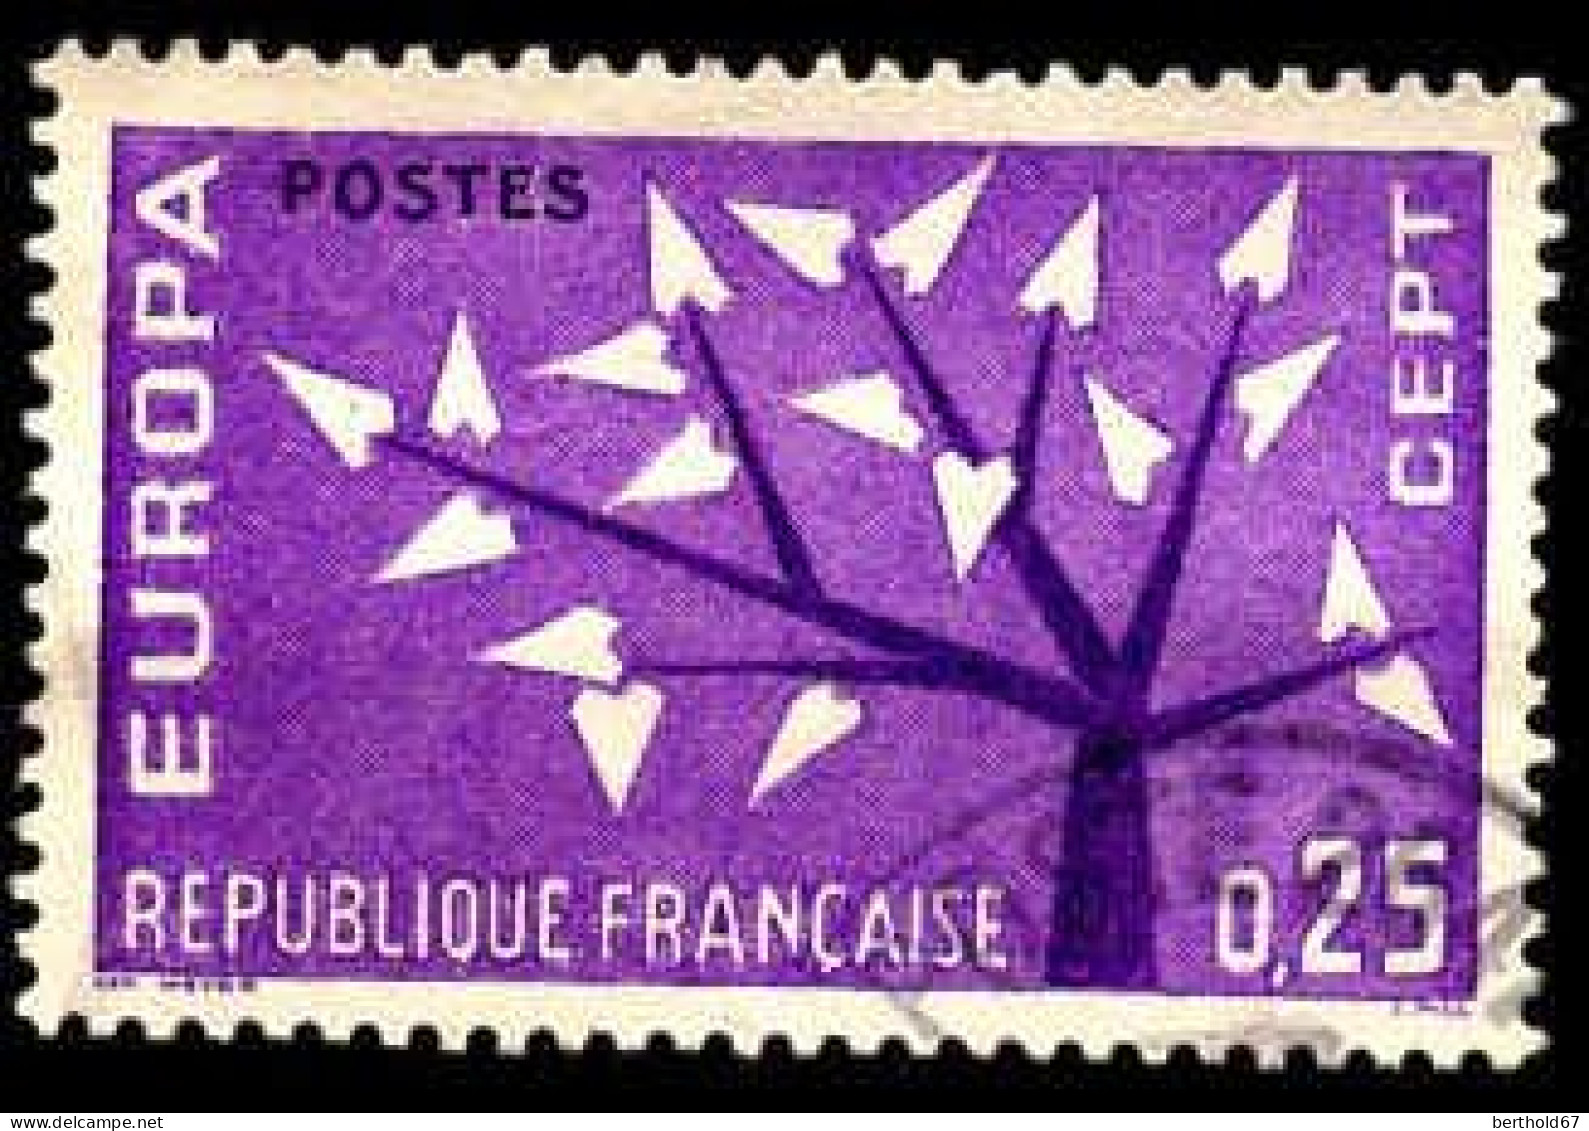 France Poste Obl Yv:1358 Mi:1411 Europa Cept Arbre à 19 Feuilles (Beau Cachet Rond) - Gebraucht